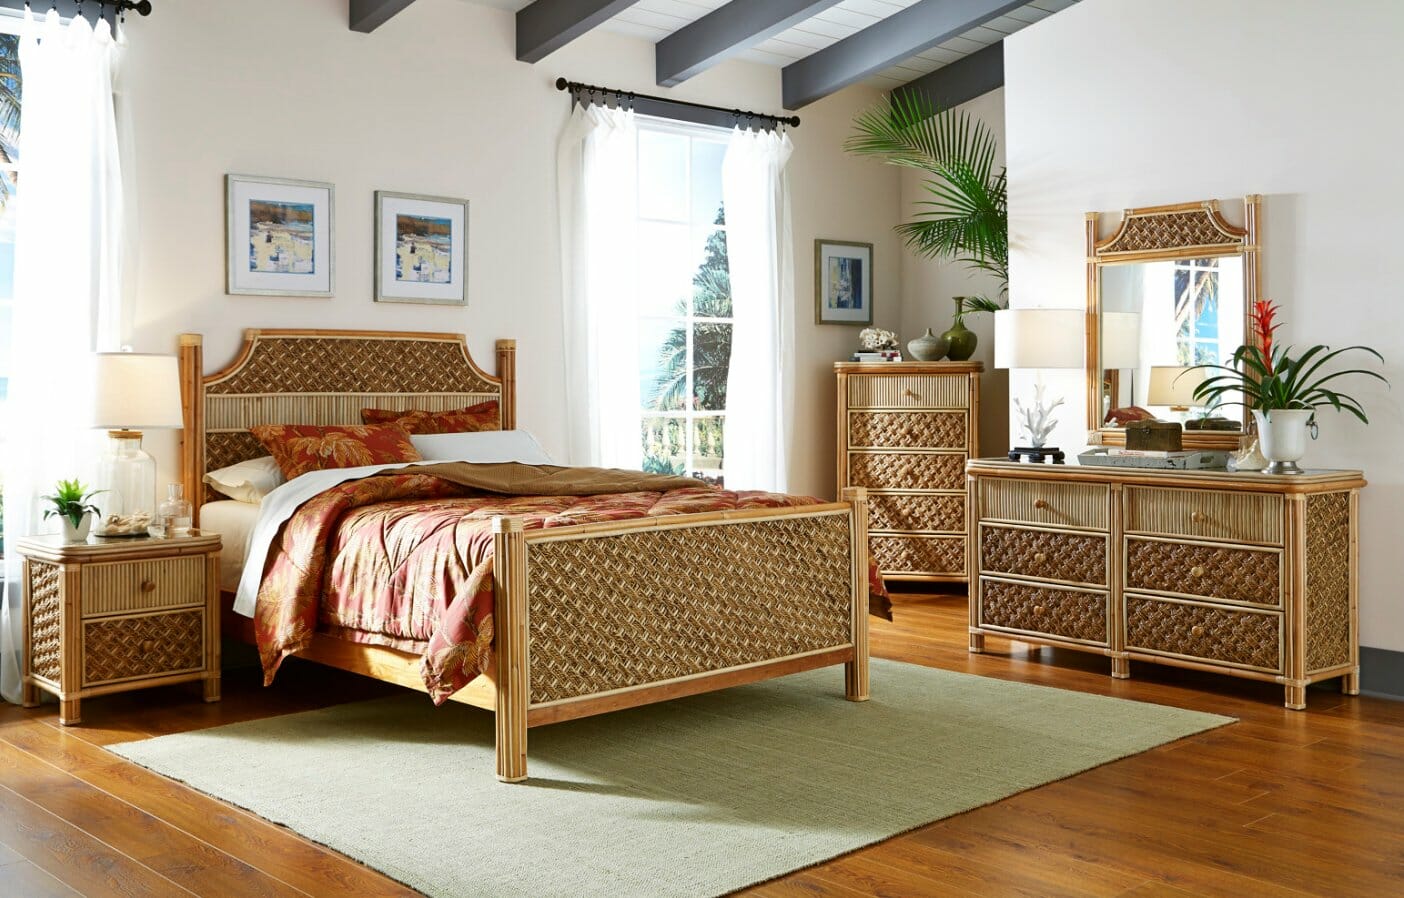 natural color wicker bedroom furniture